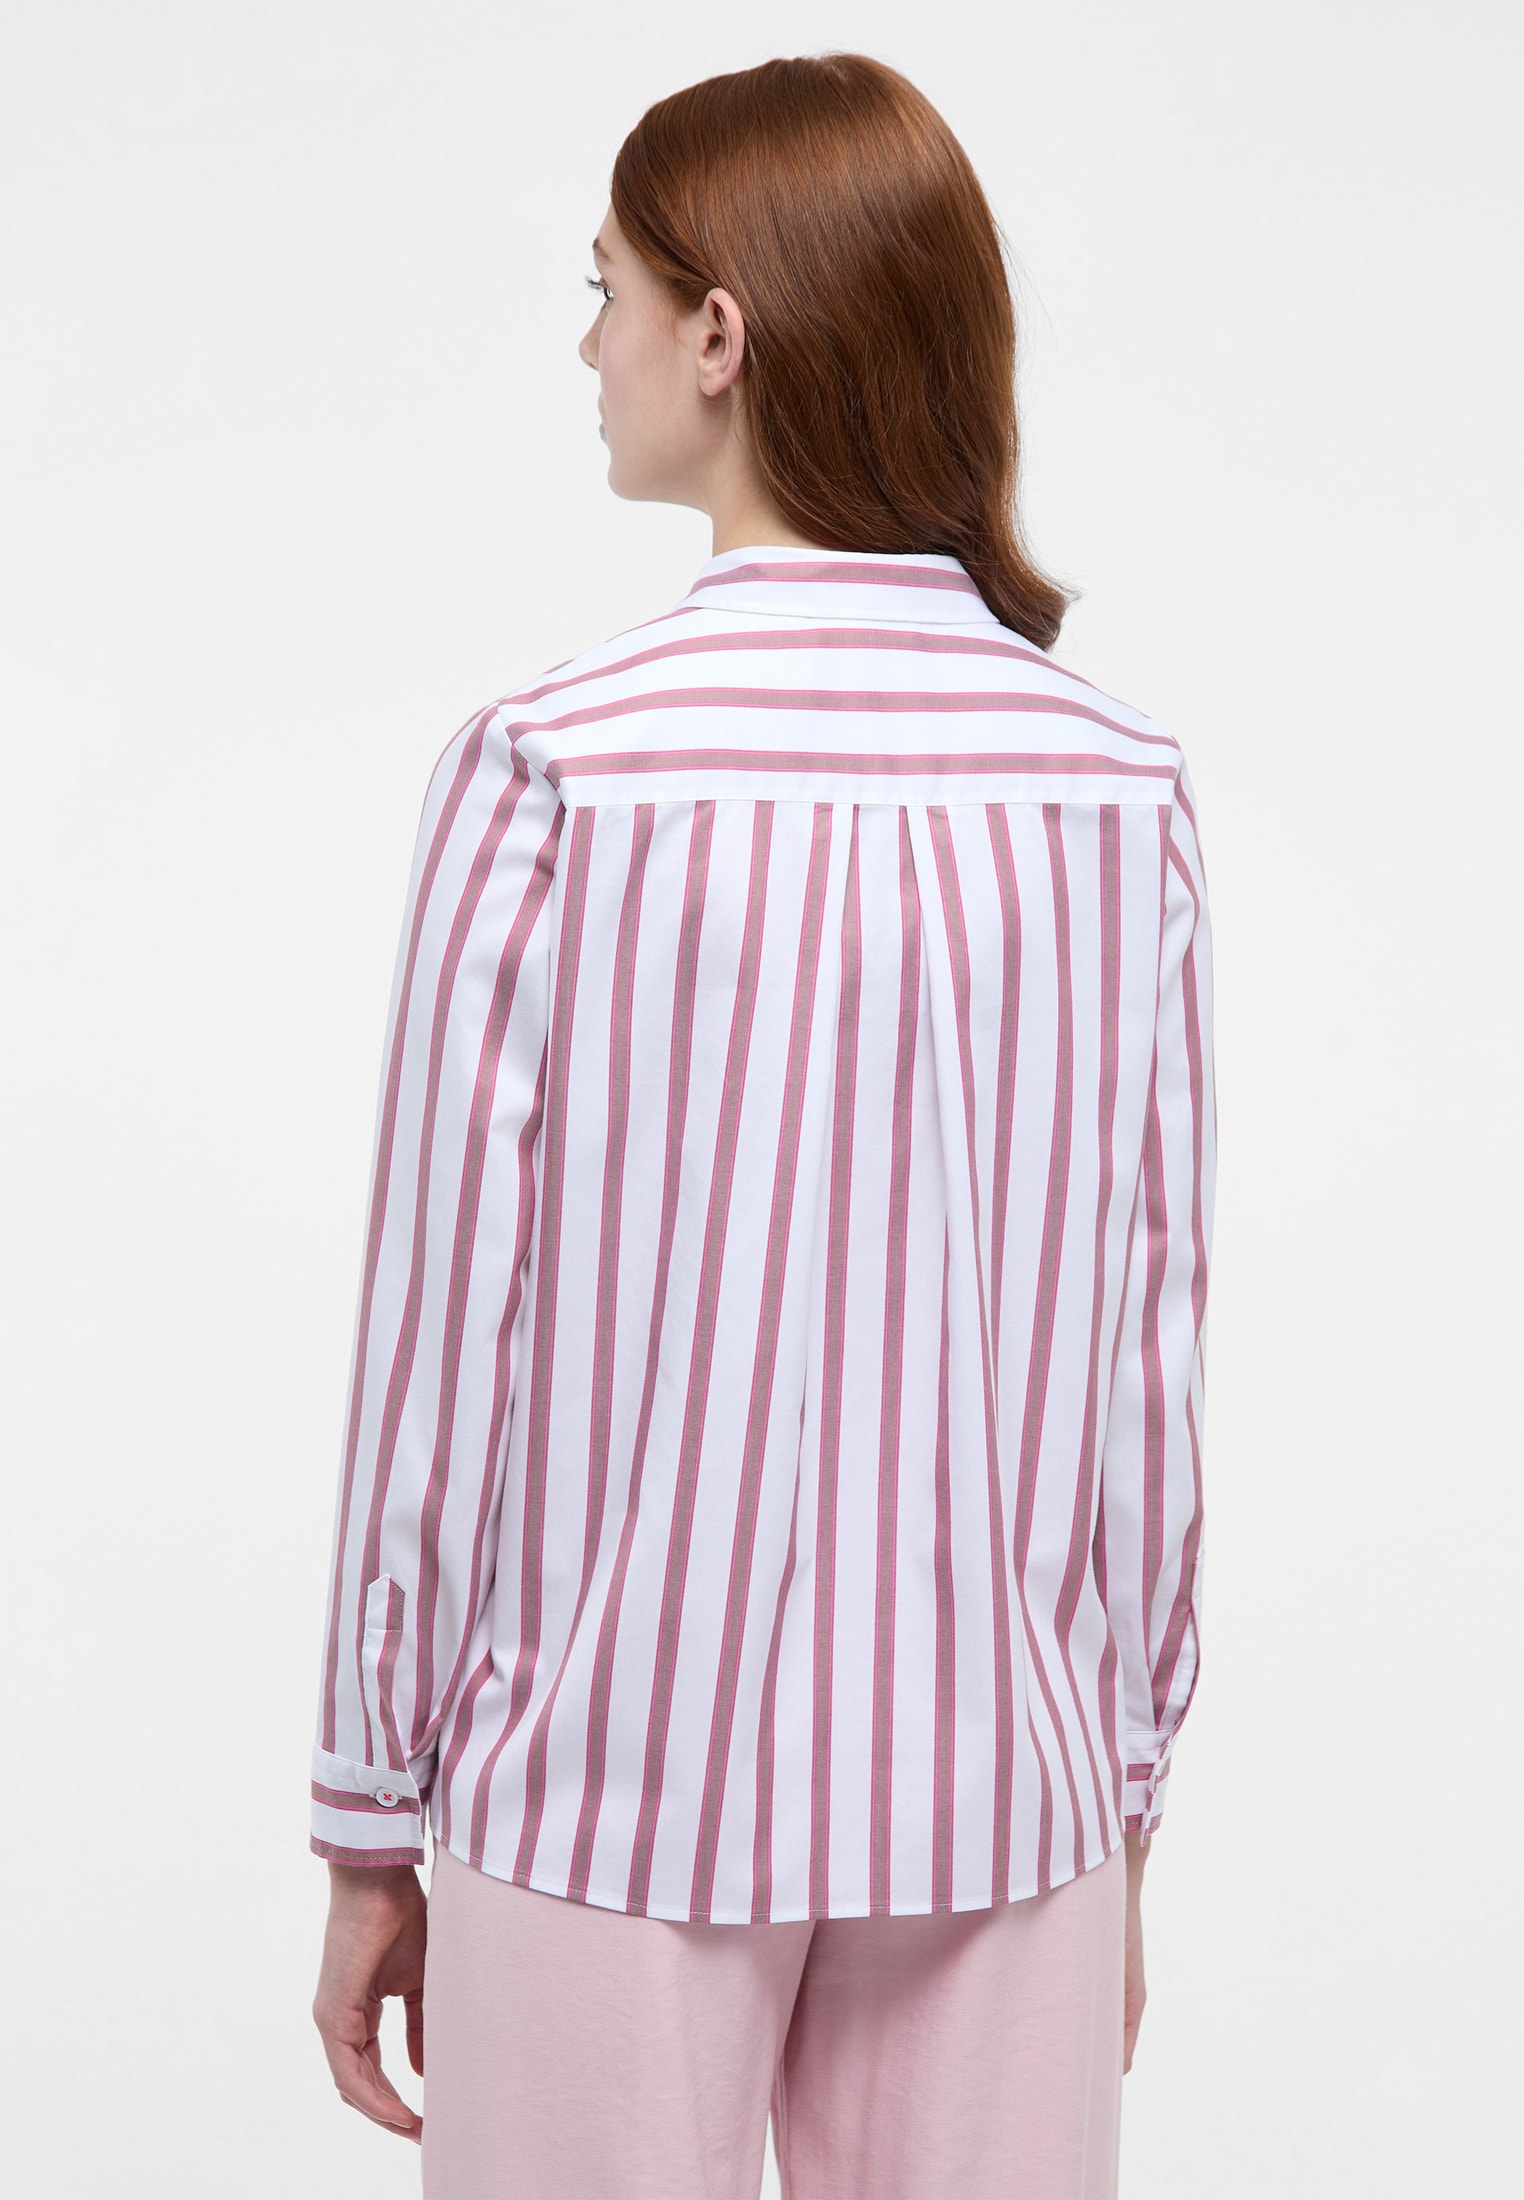 | | 2BL04213-15-21-46-1/1 Bluse Soft 46 Shirt pink gestreift Langarm Luxury in pink | |